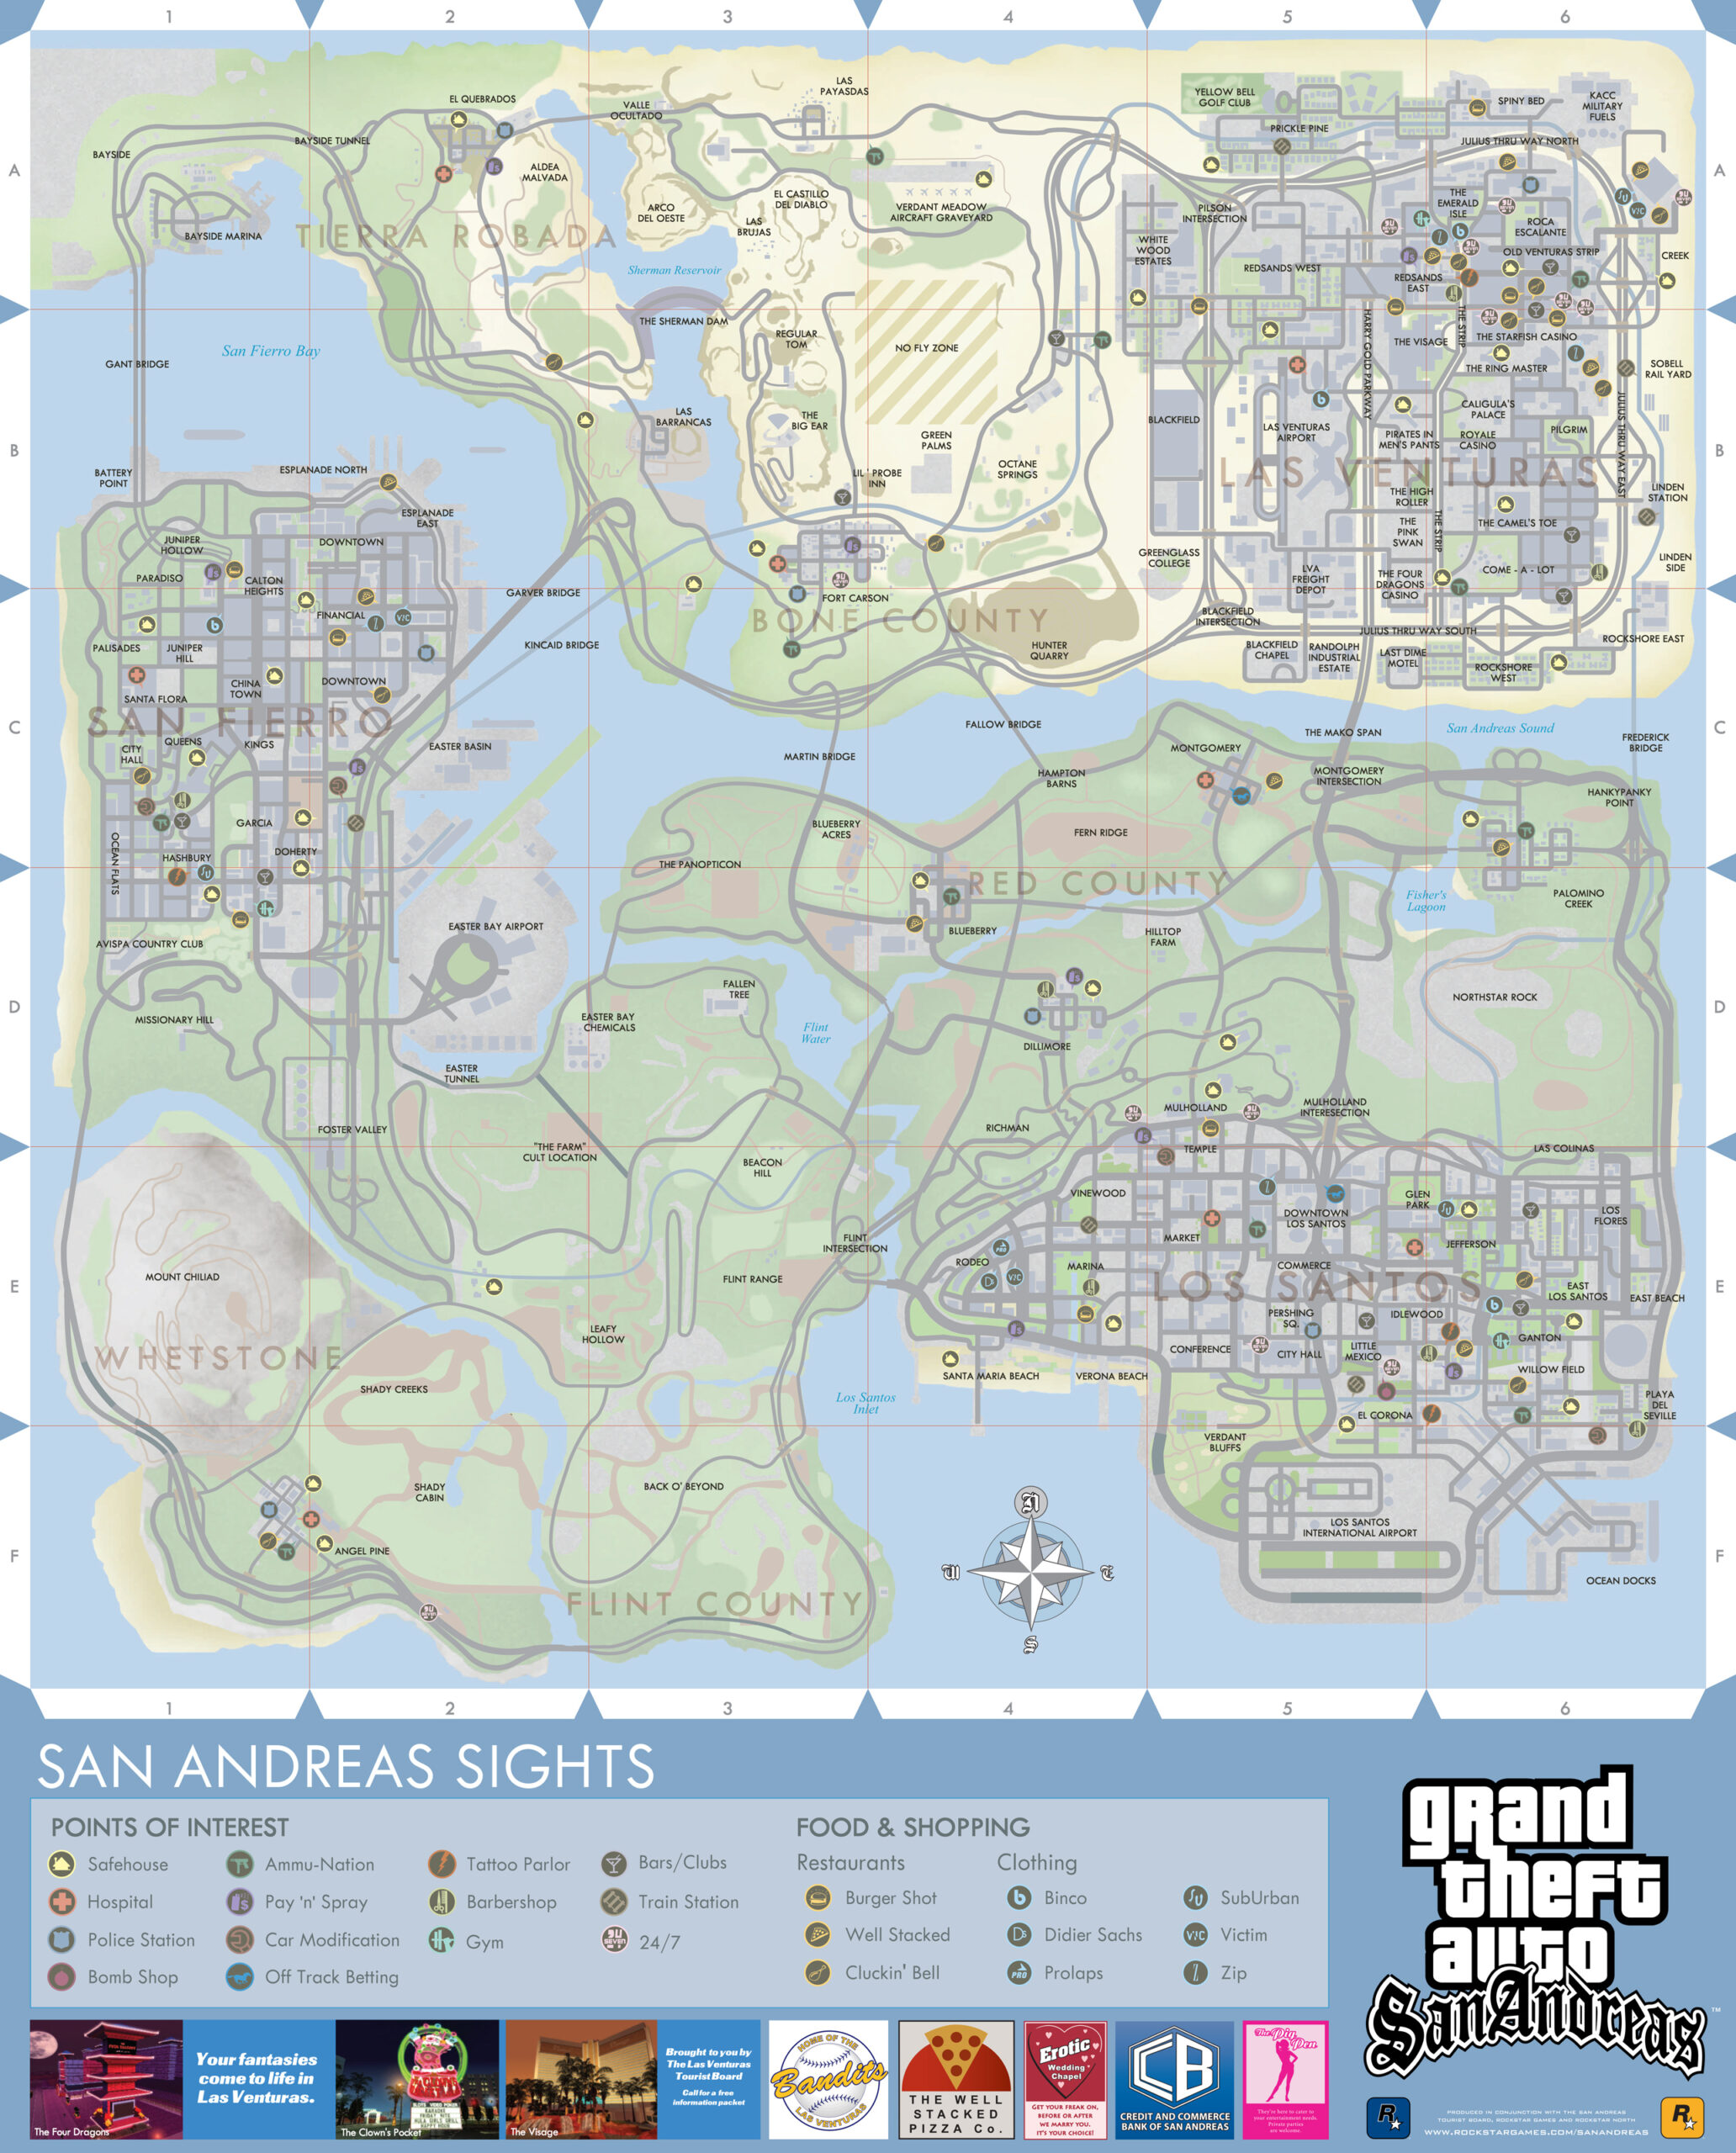 80 códigos de GTA San Andreas – PS2 – Todos testados!